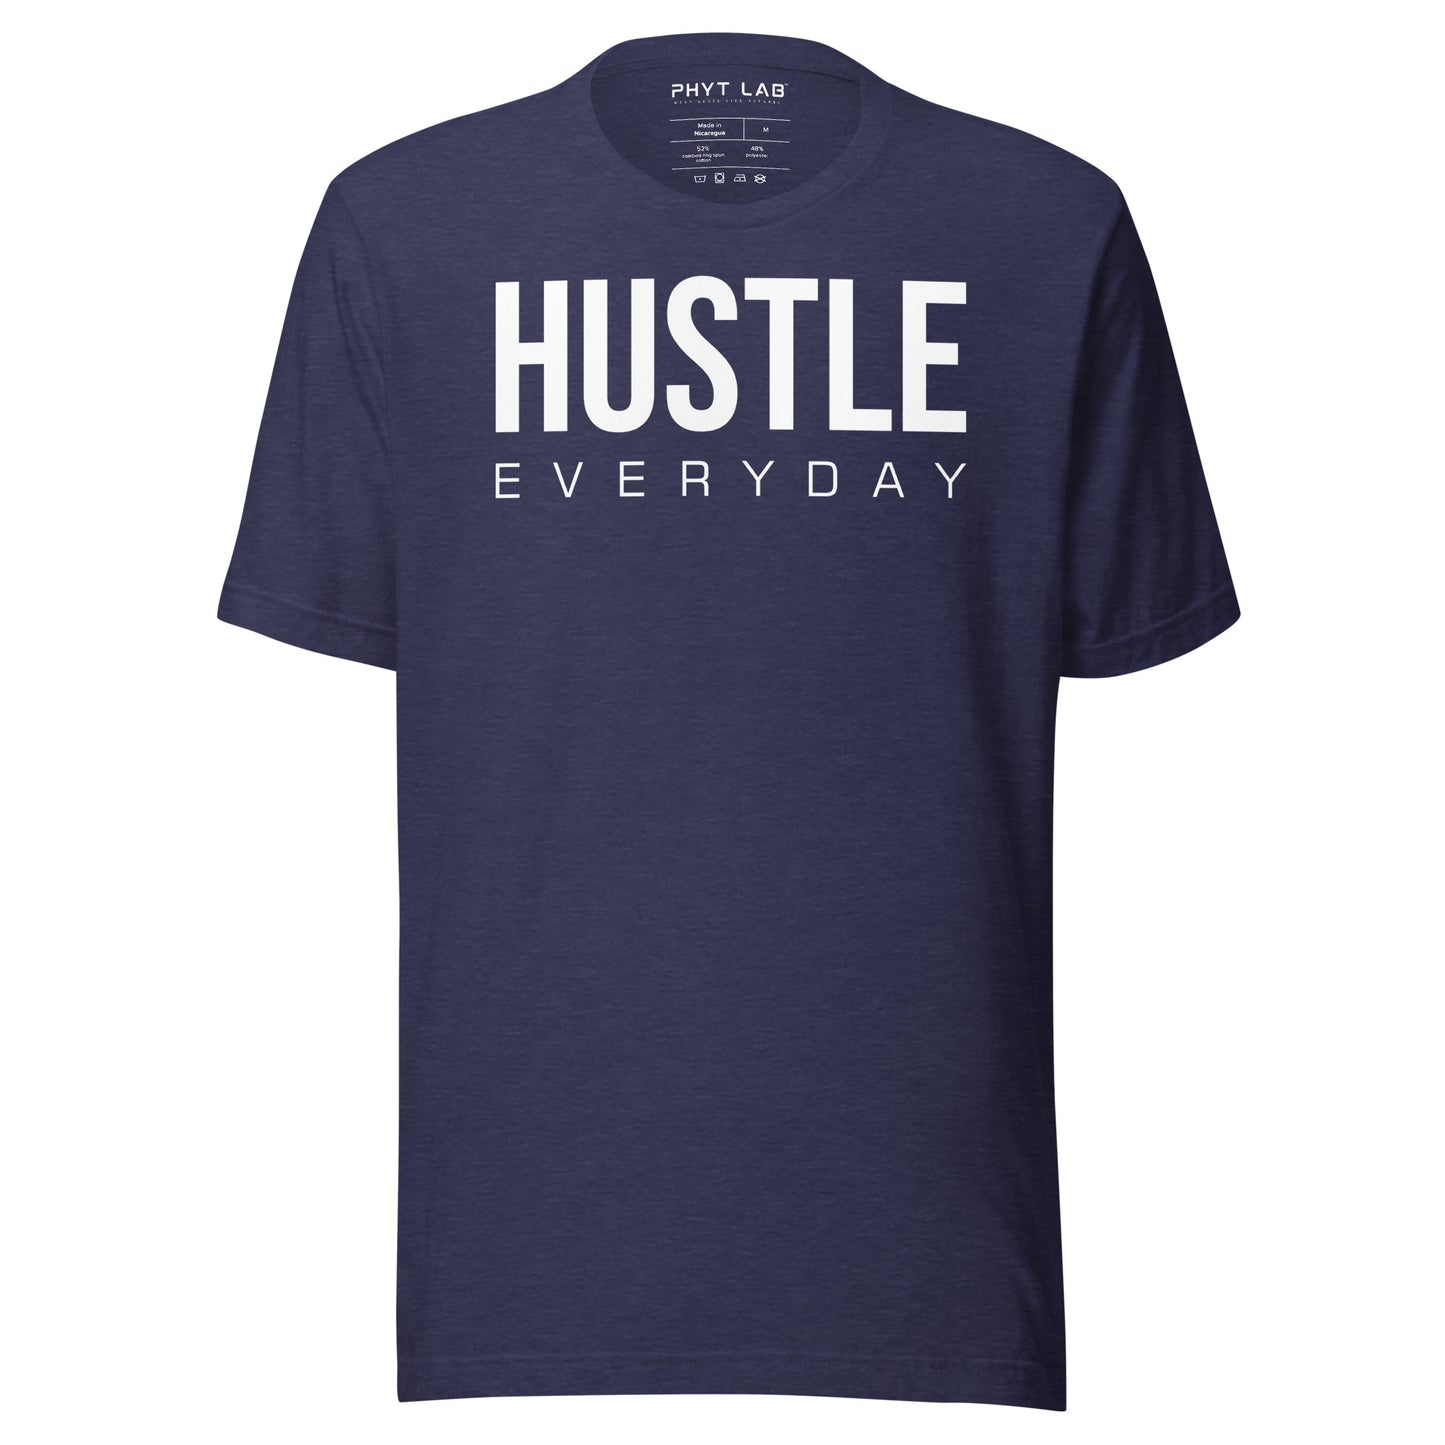 Hustle Statement T-Shirt (NEW Colors)